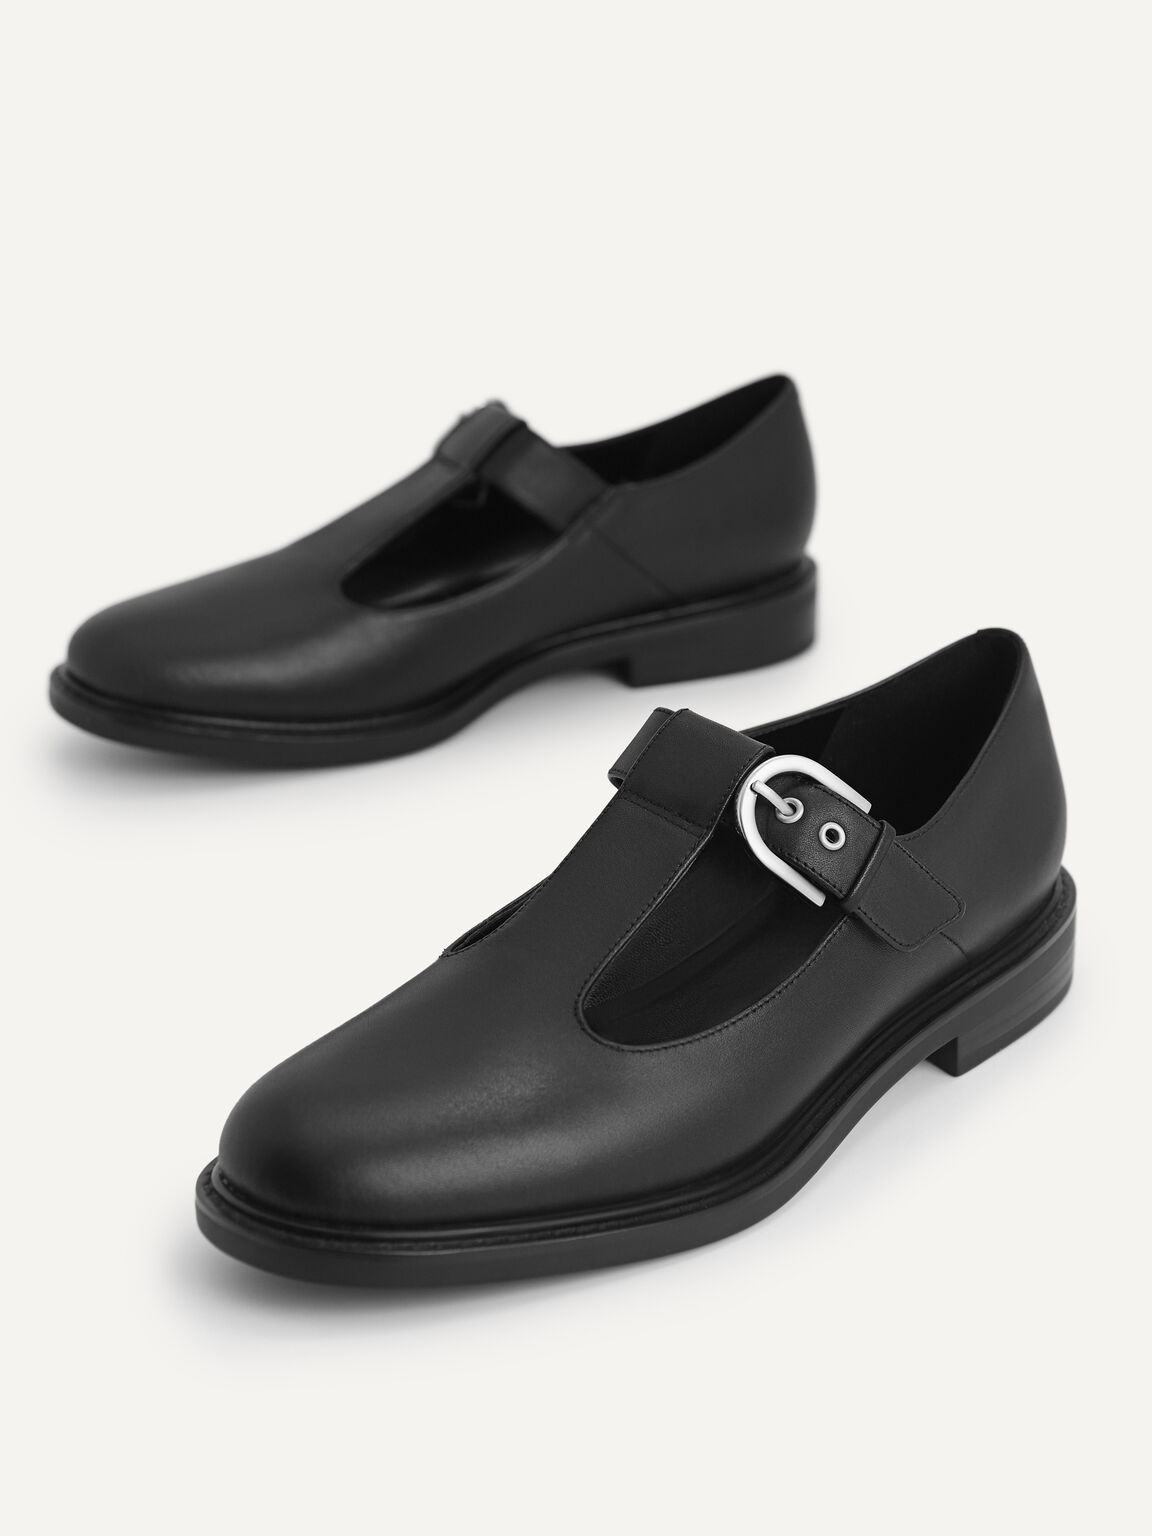 Leather Mary Jane Shoes, Black